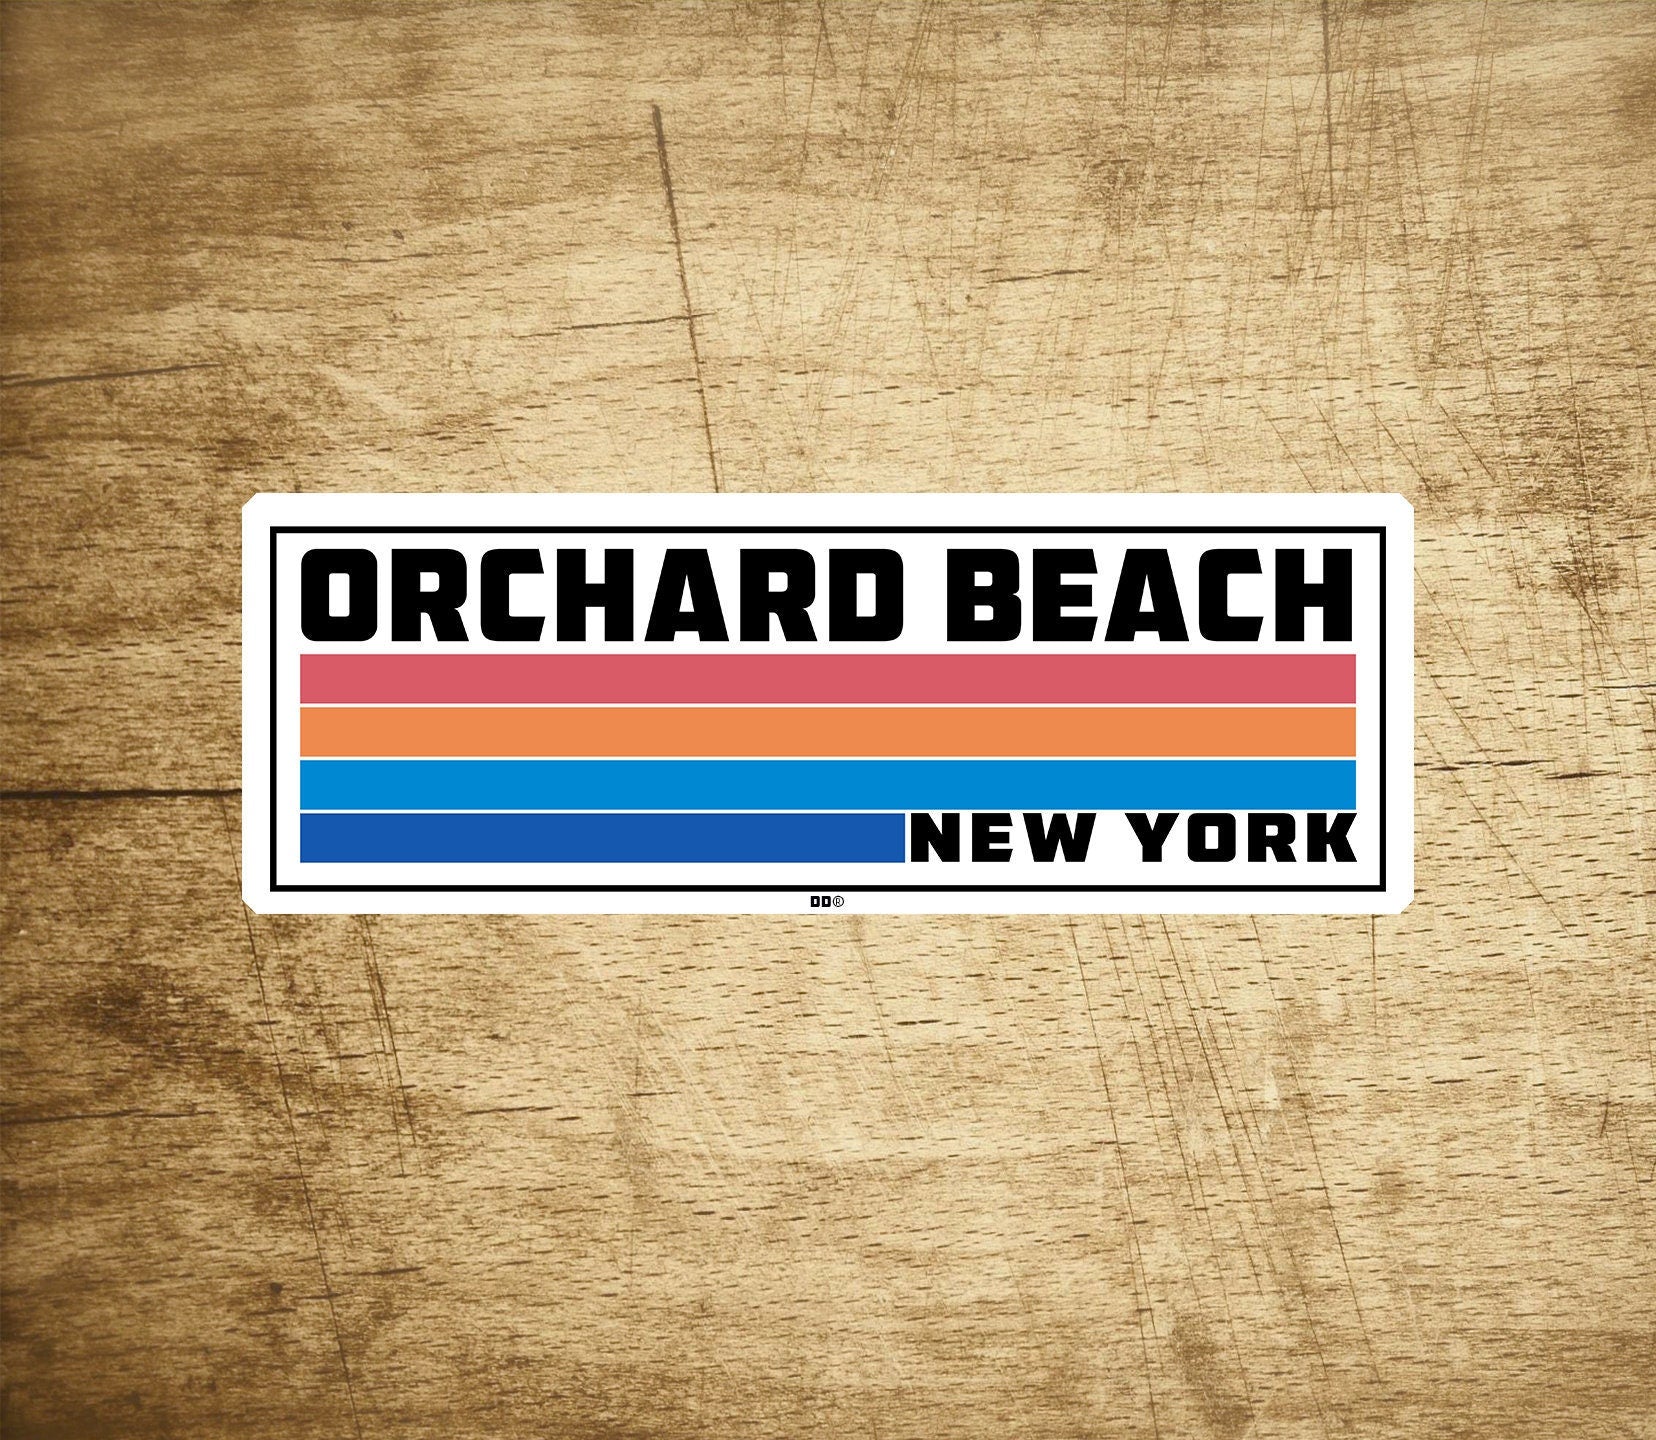 Orchard Beach New York Sticker Decal Vinyl 3.75" x 1.4" The Bronx